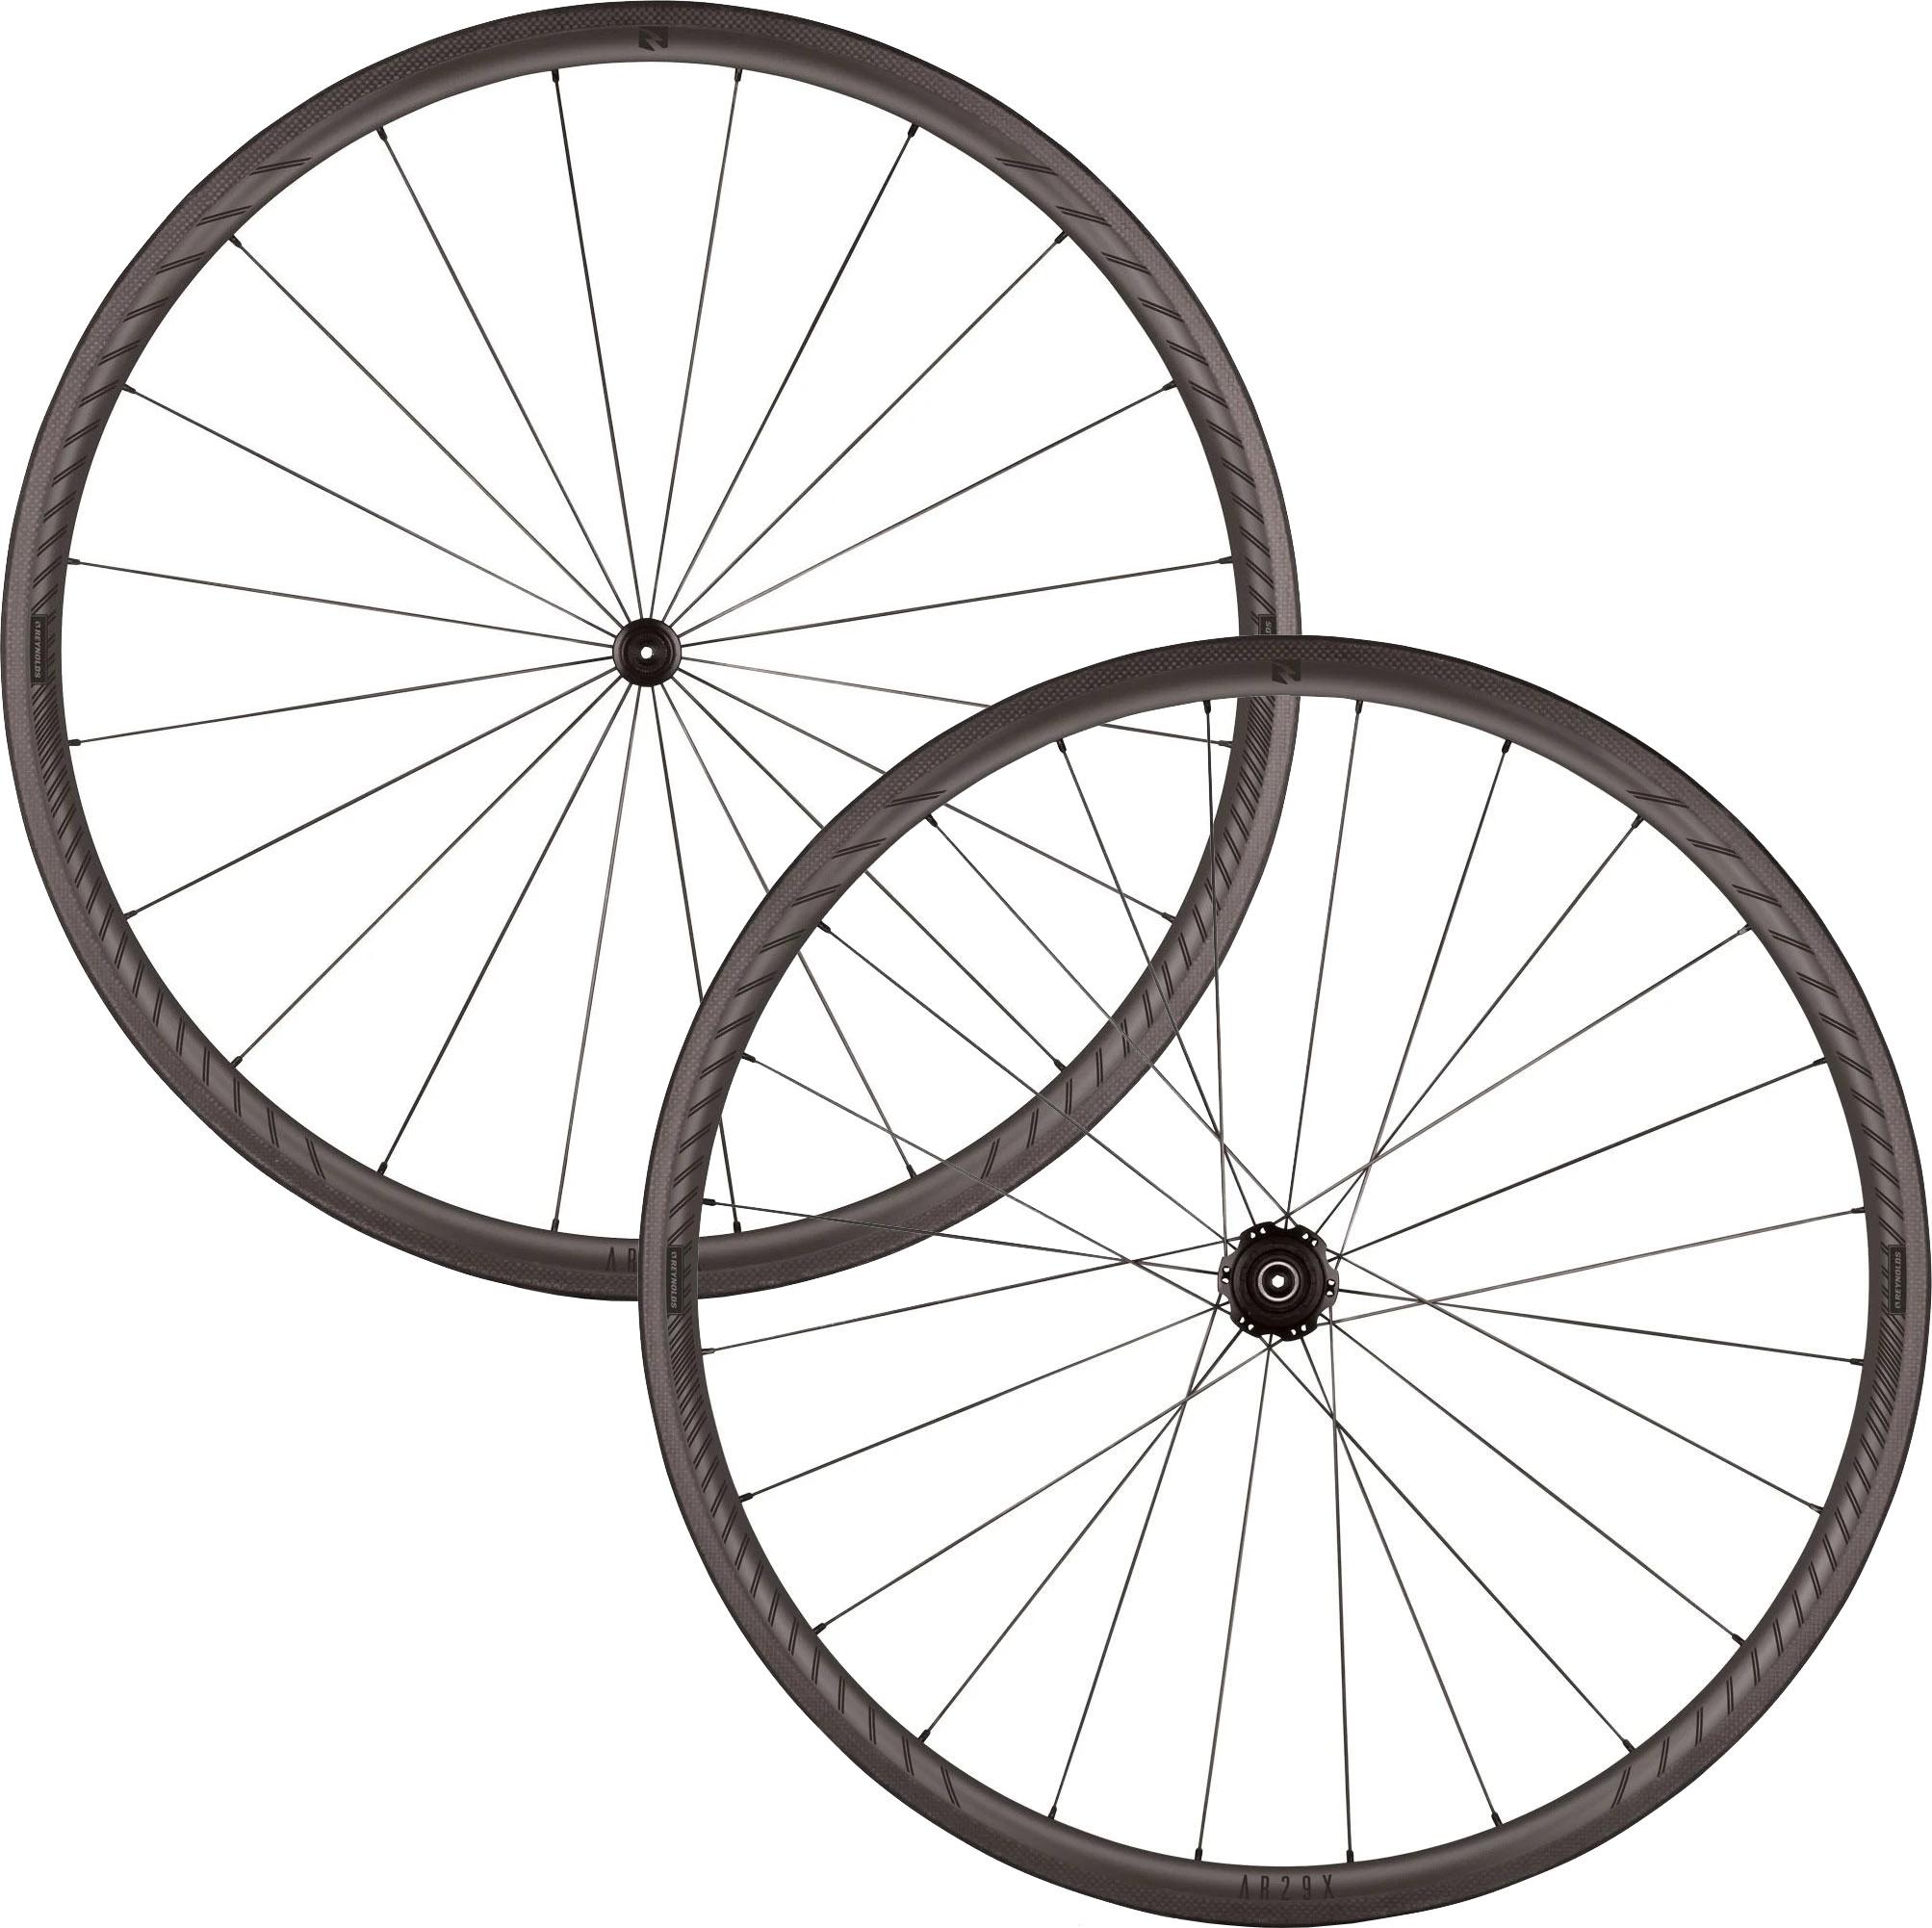 Reynolds ARX 29 Carbon Road Wheelset | cycling wheel